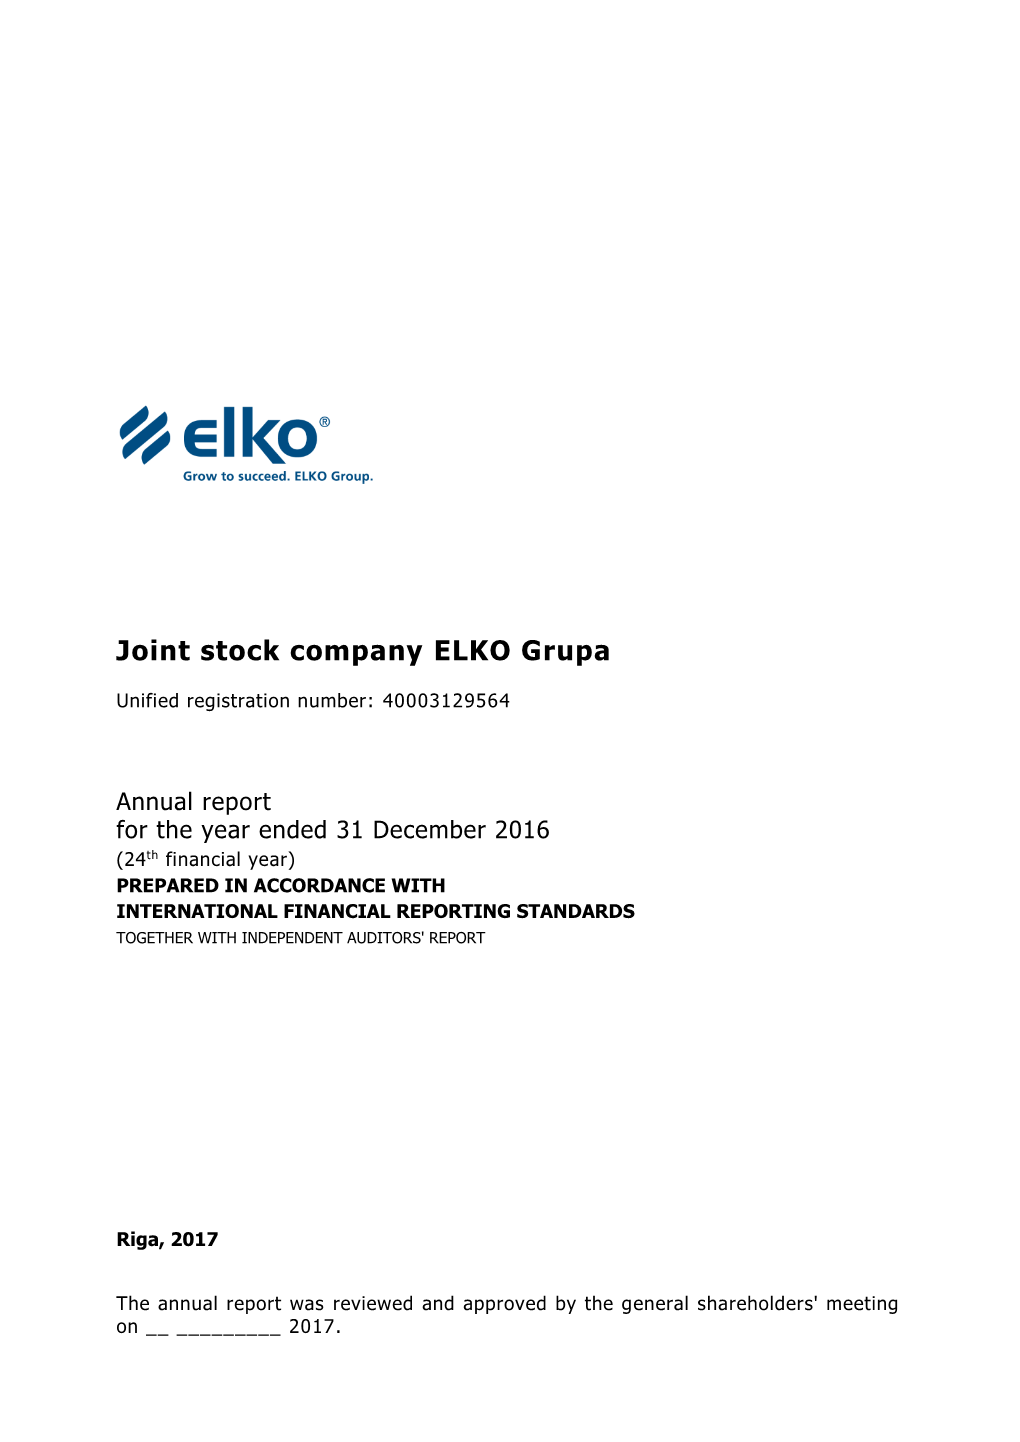 Joint Stock Company ELKO Grupa